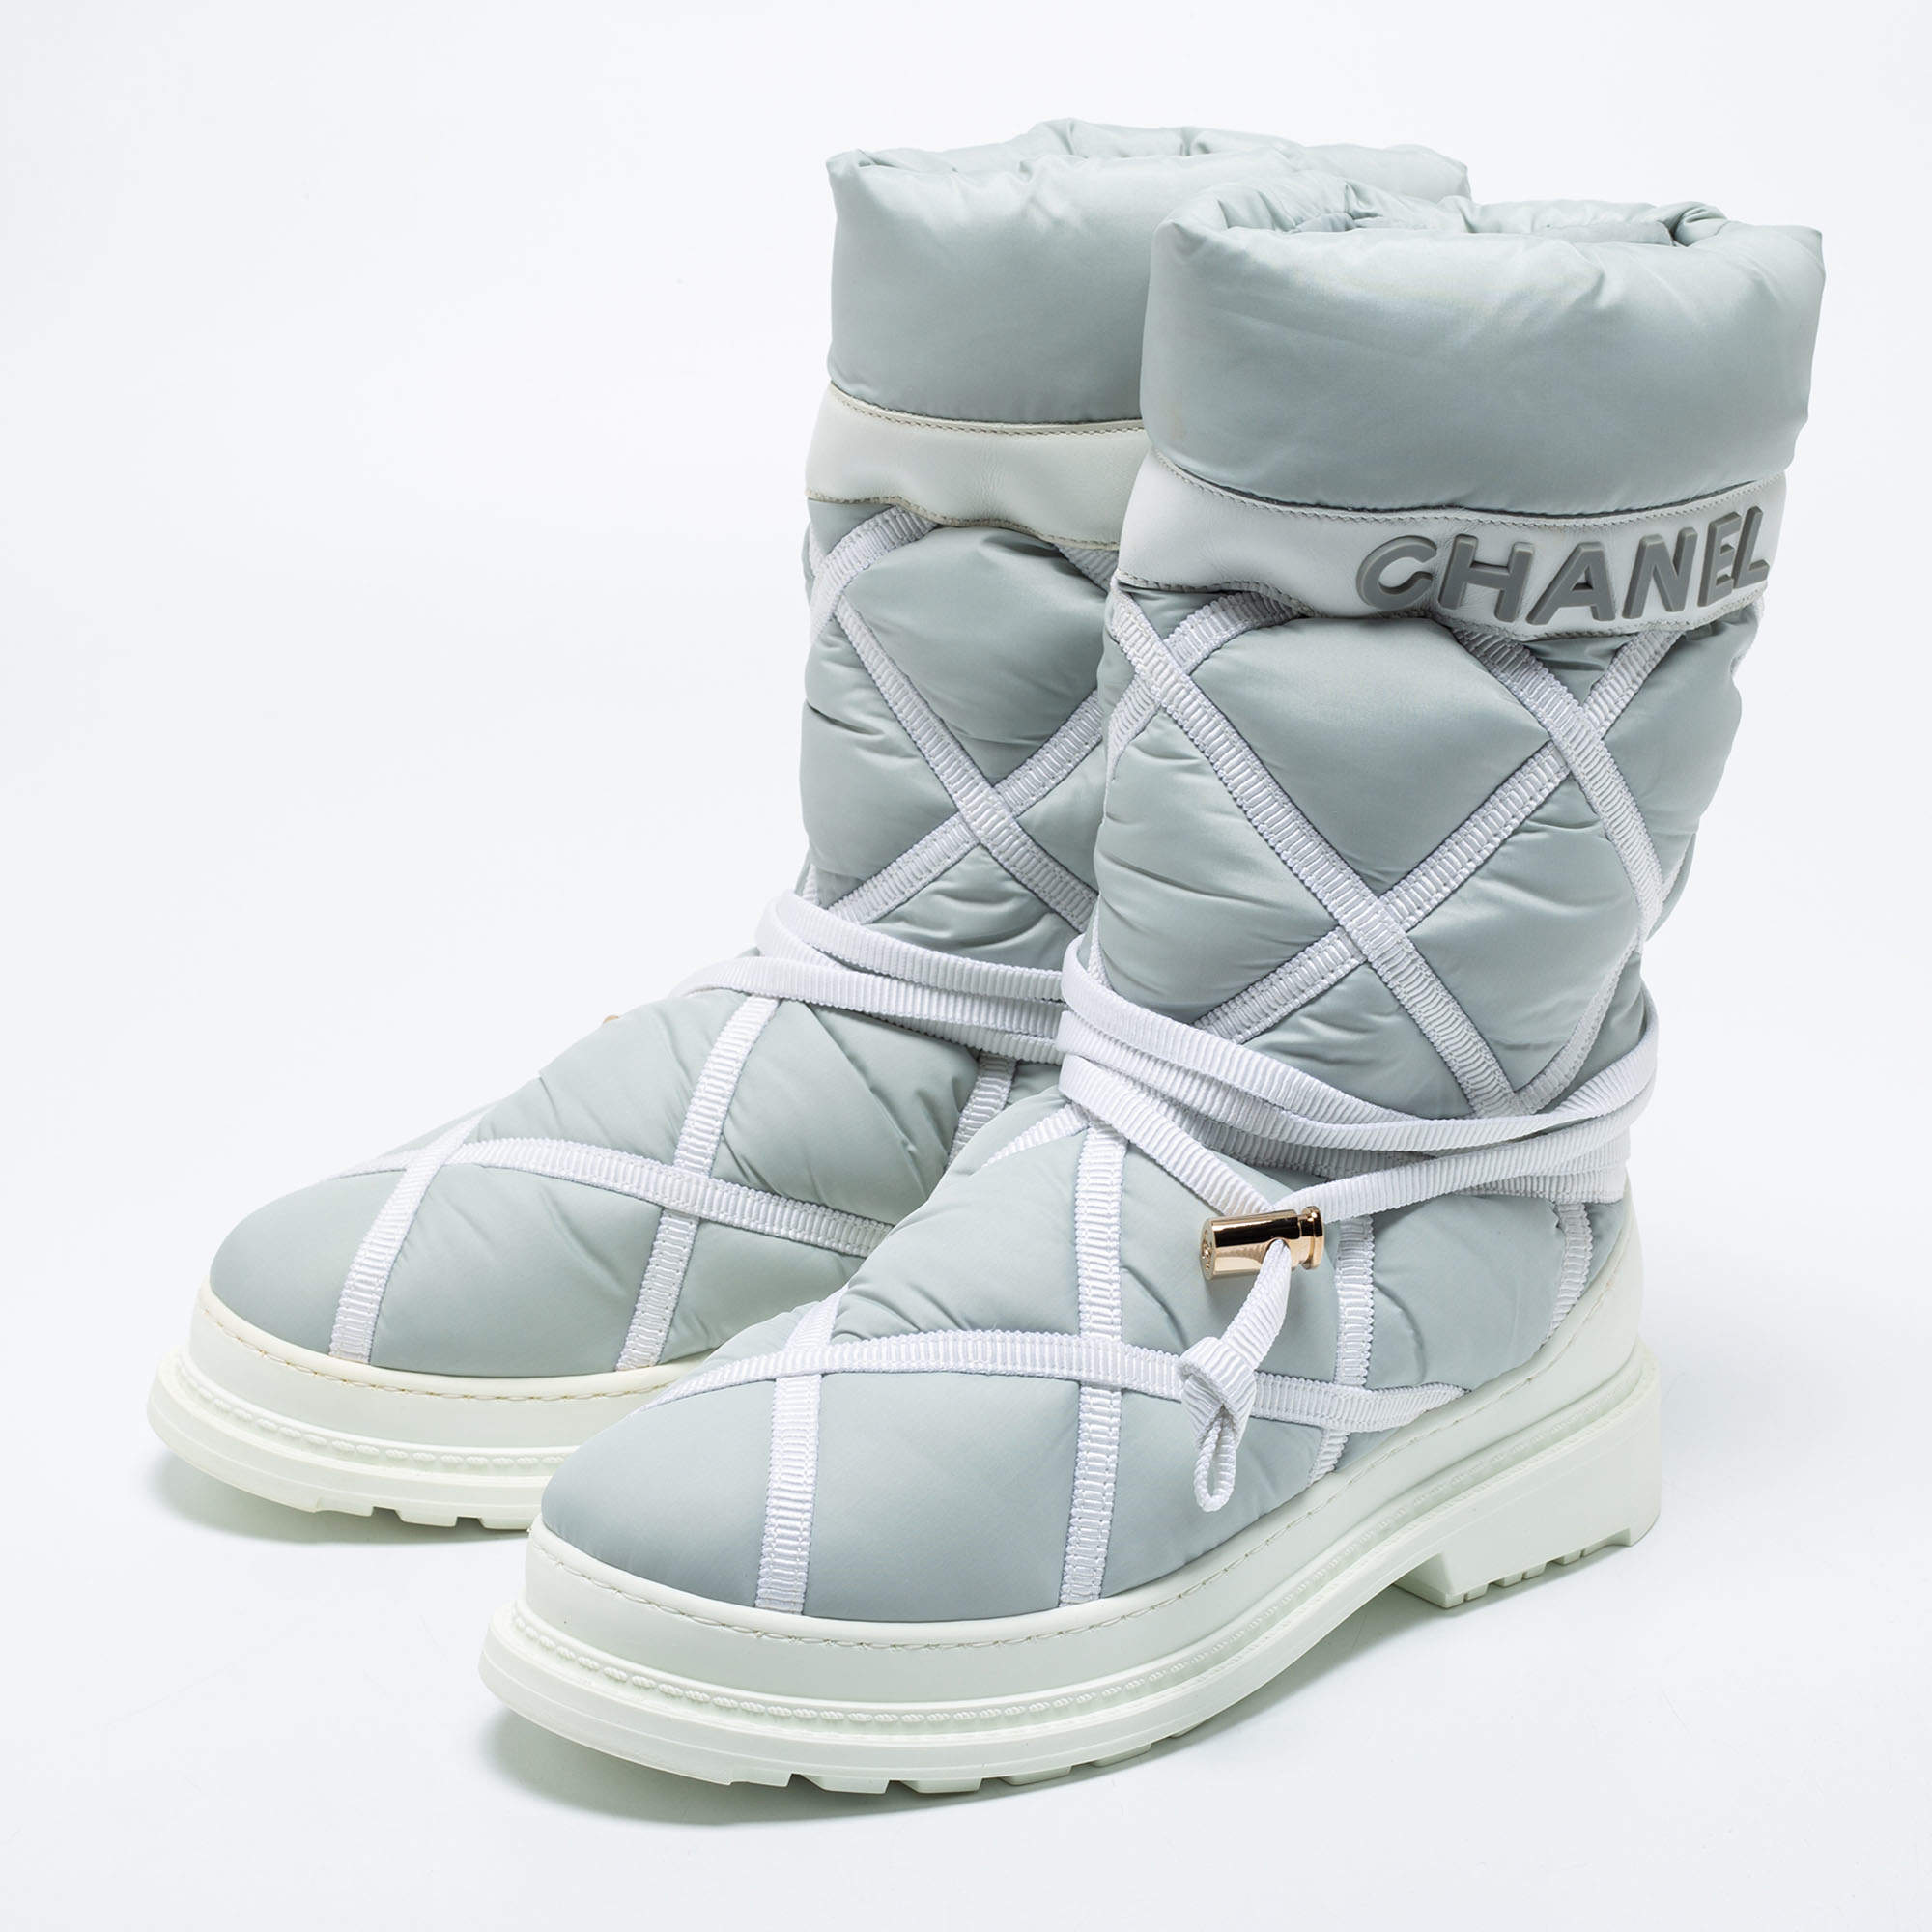 Chanel 2018 18A Winter White Nylon Down Shearling Lined Snow Winter Boots  EU 38